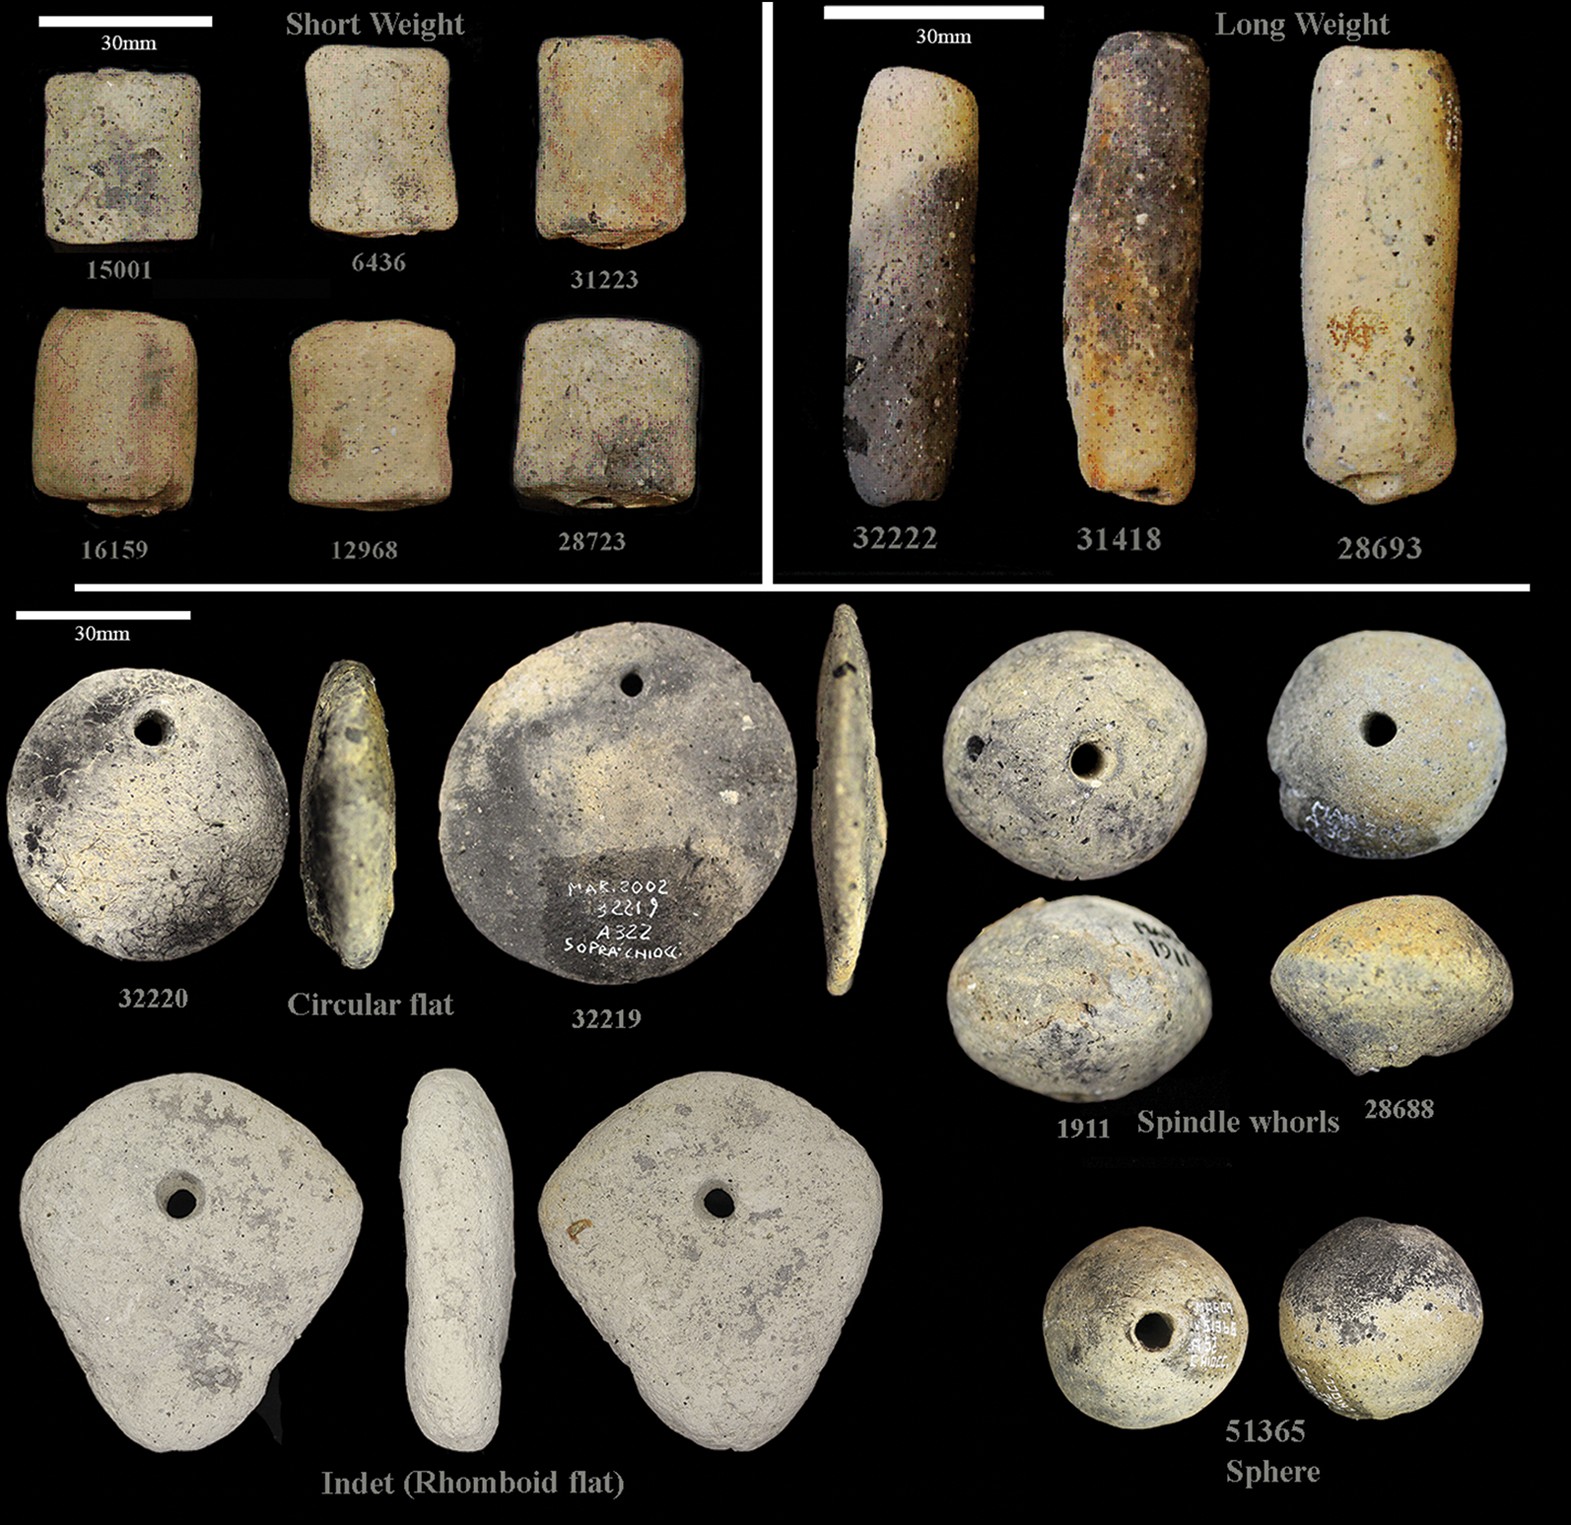 Espirais de fuso e pesos de tear encontrados no assentamento de La Marmotta  — Foto: JF Gibaja e Museo delle Civiltà-Mario Mineo 